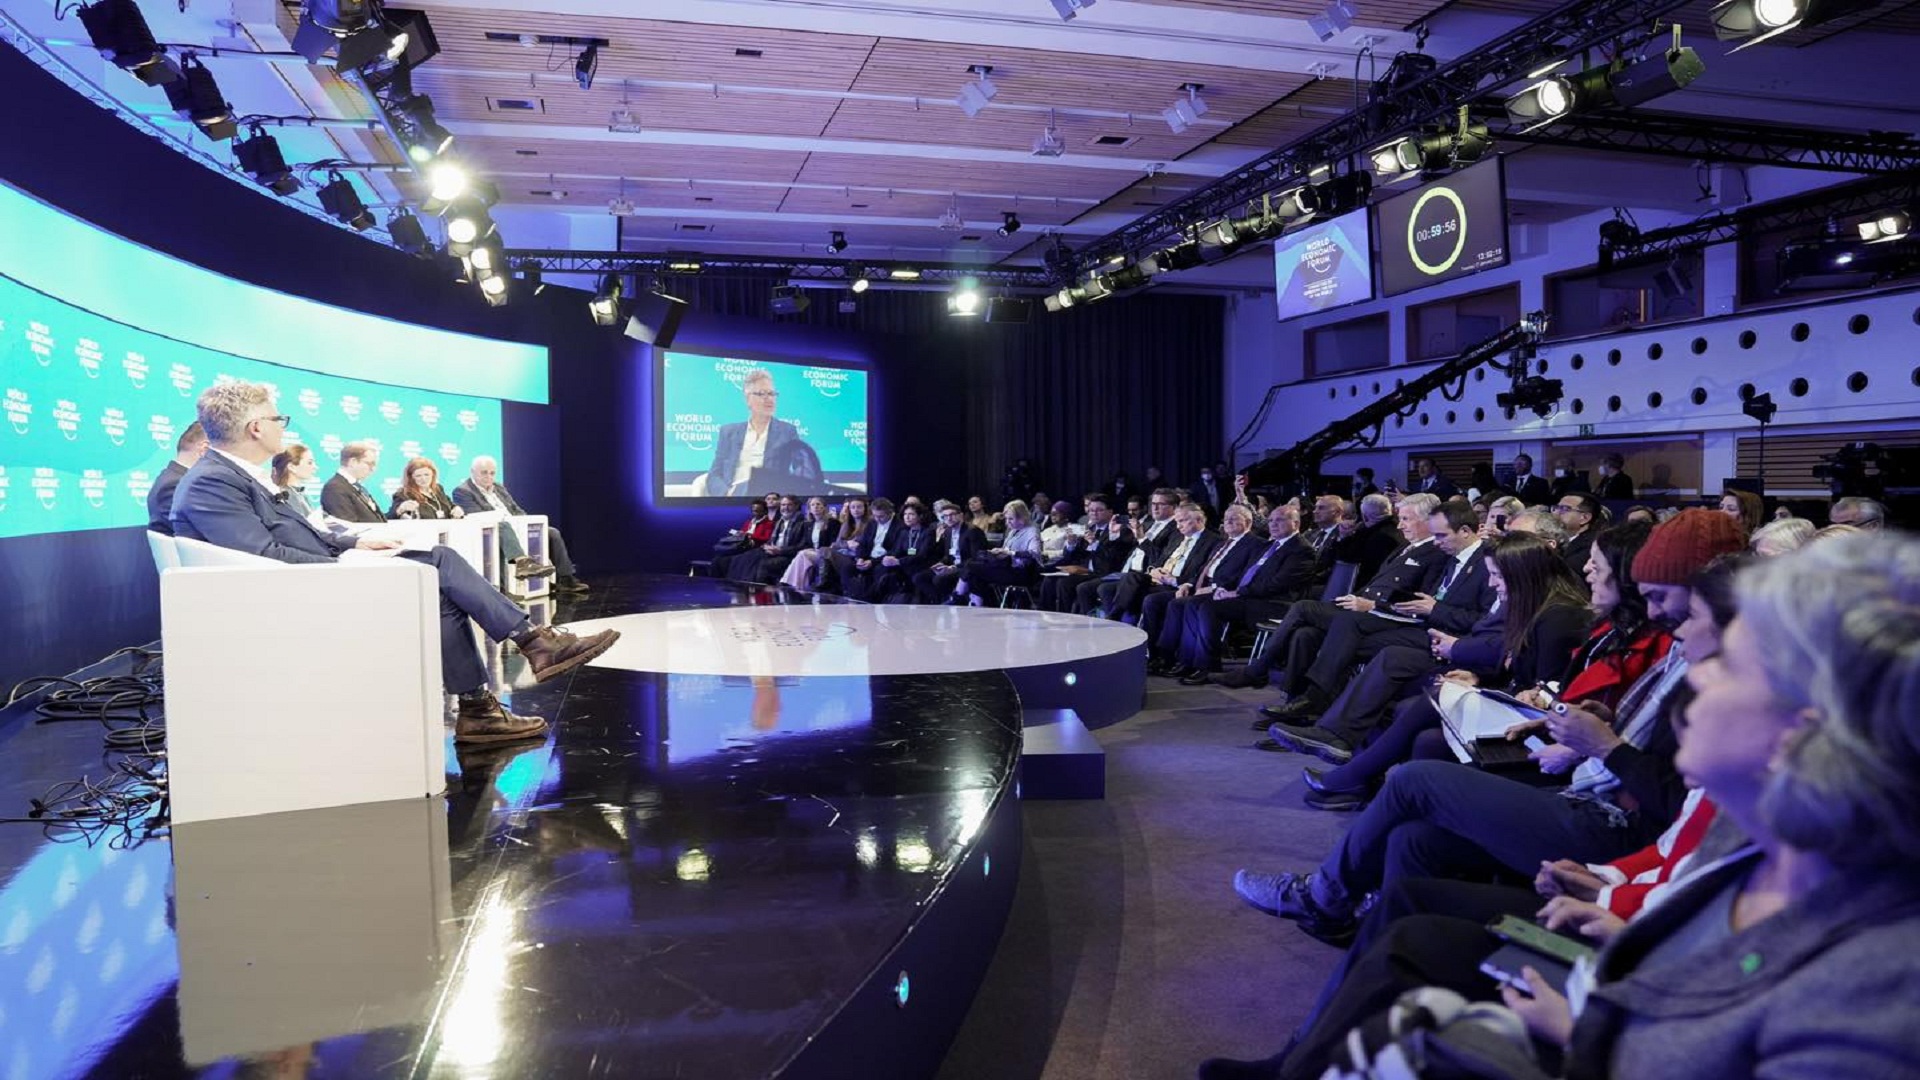  President Rashid attends World Economic Forum in Davos, Switzerland. PUKMEDIA